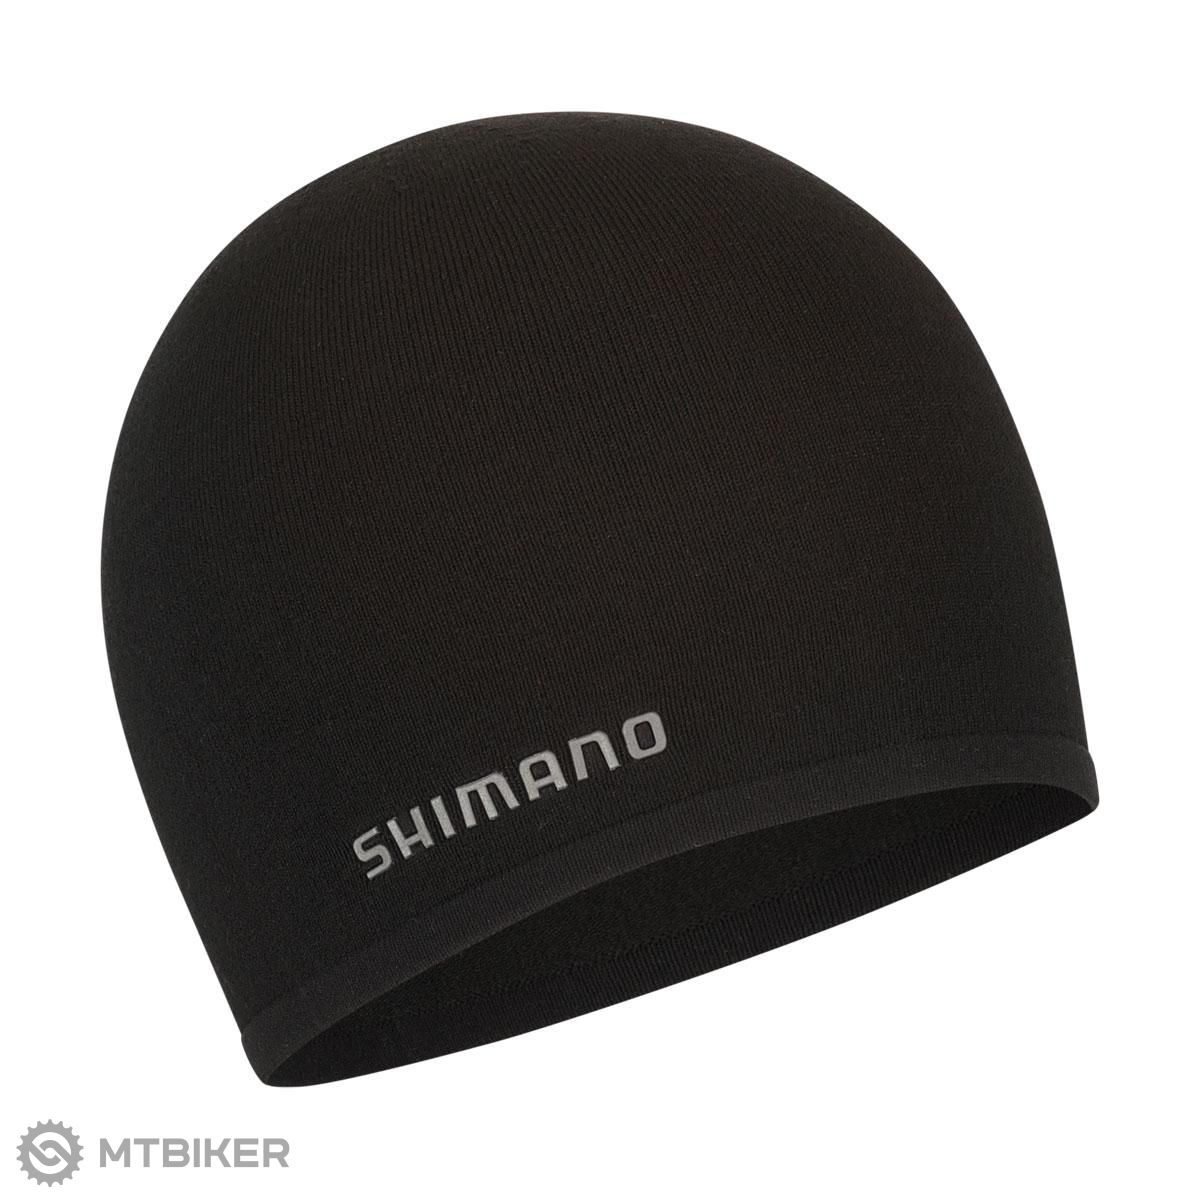 Shimano URU helmet cap, black 